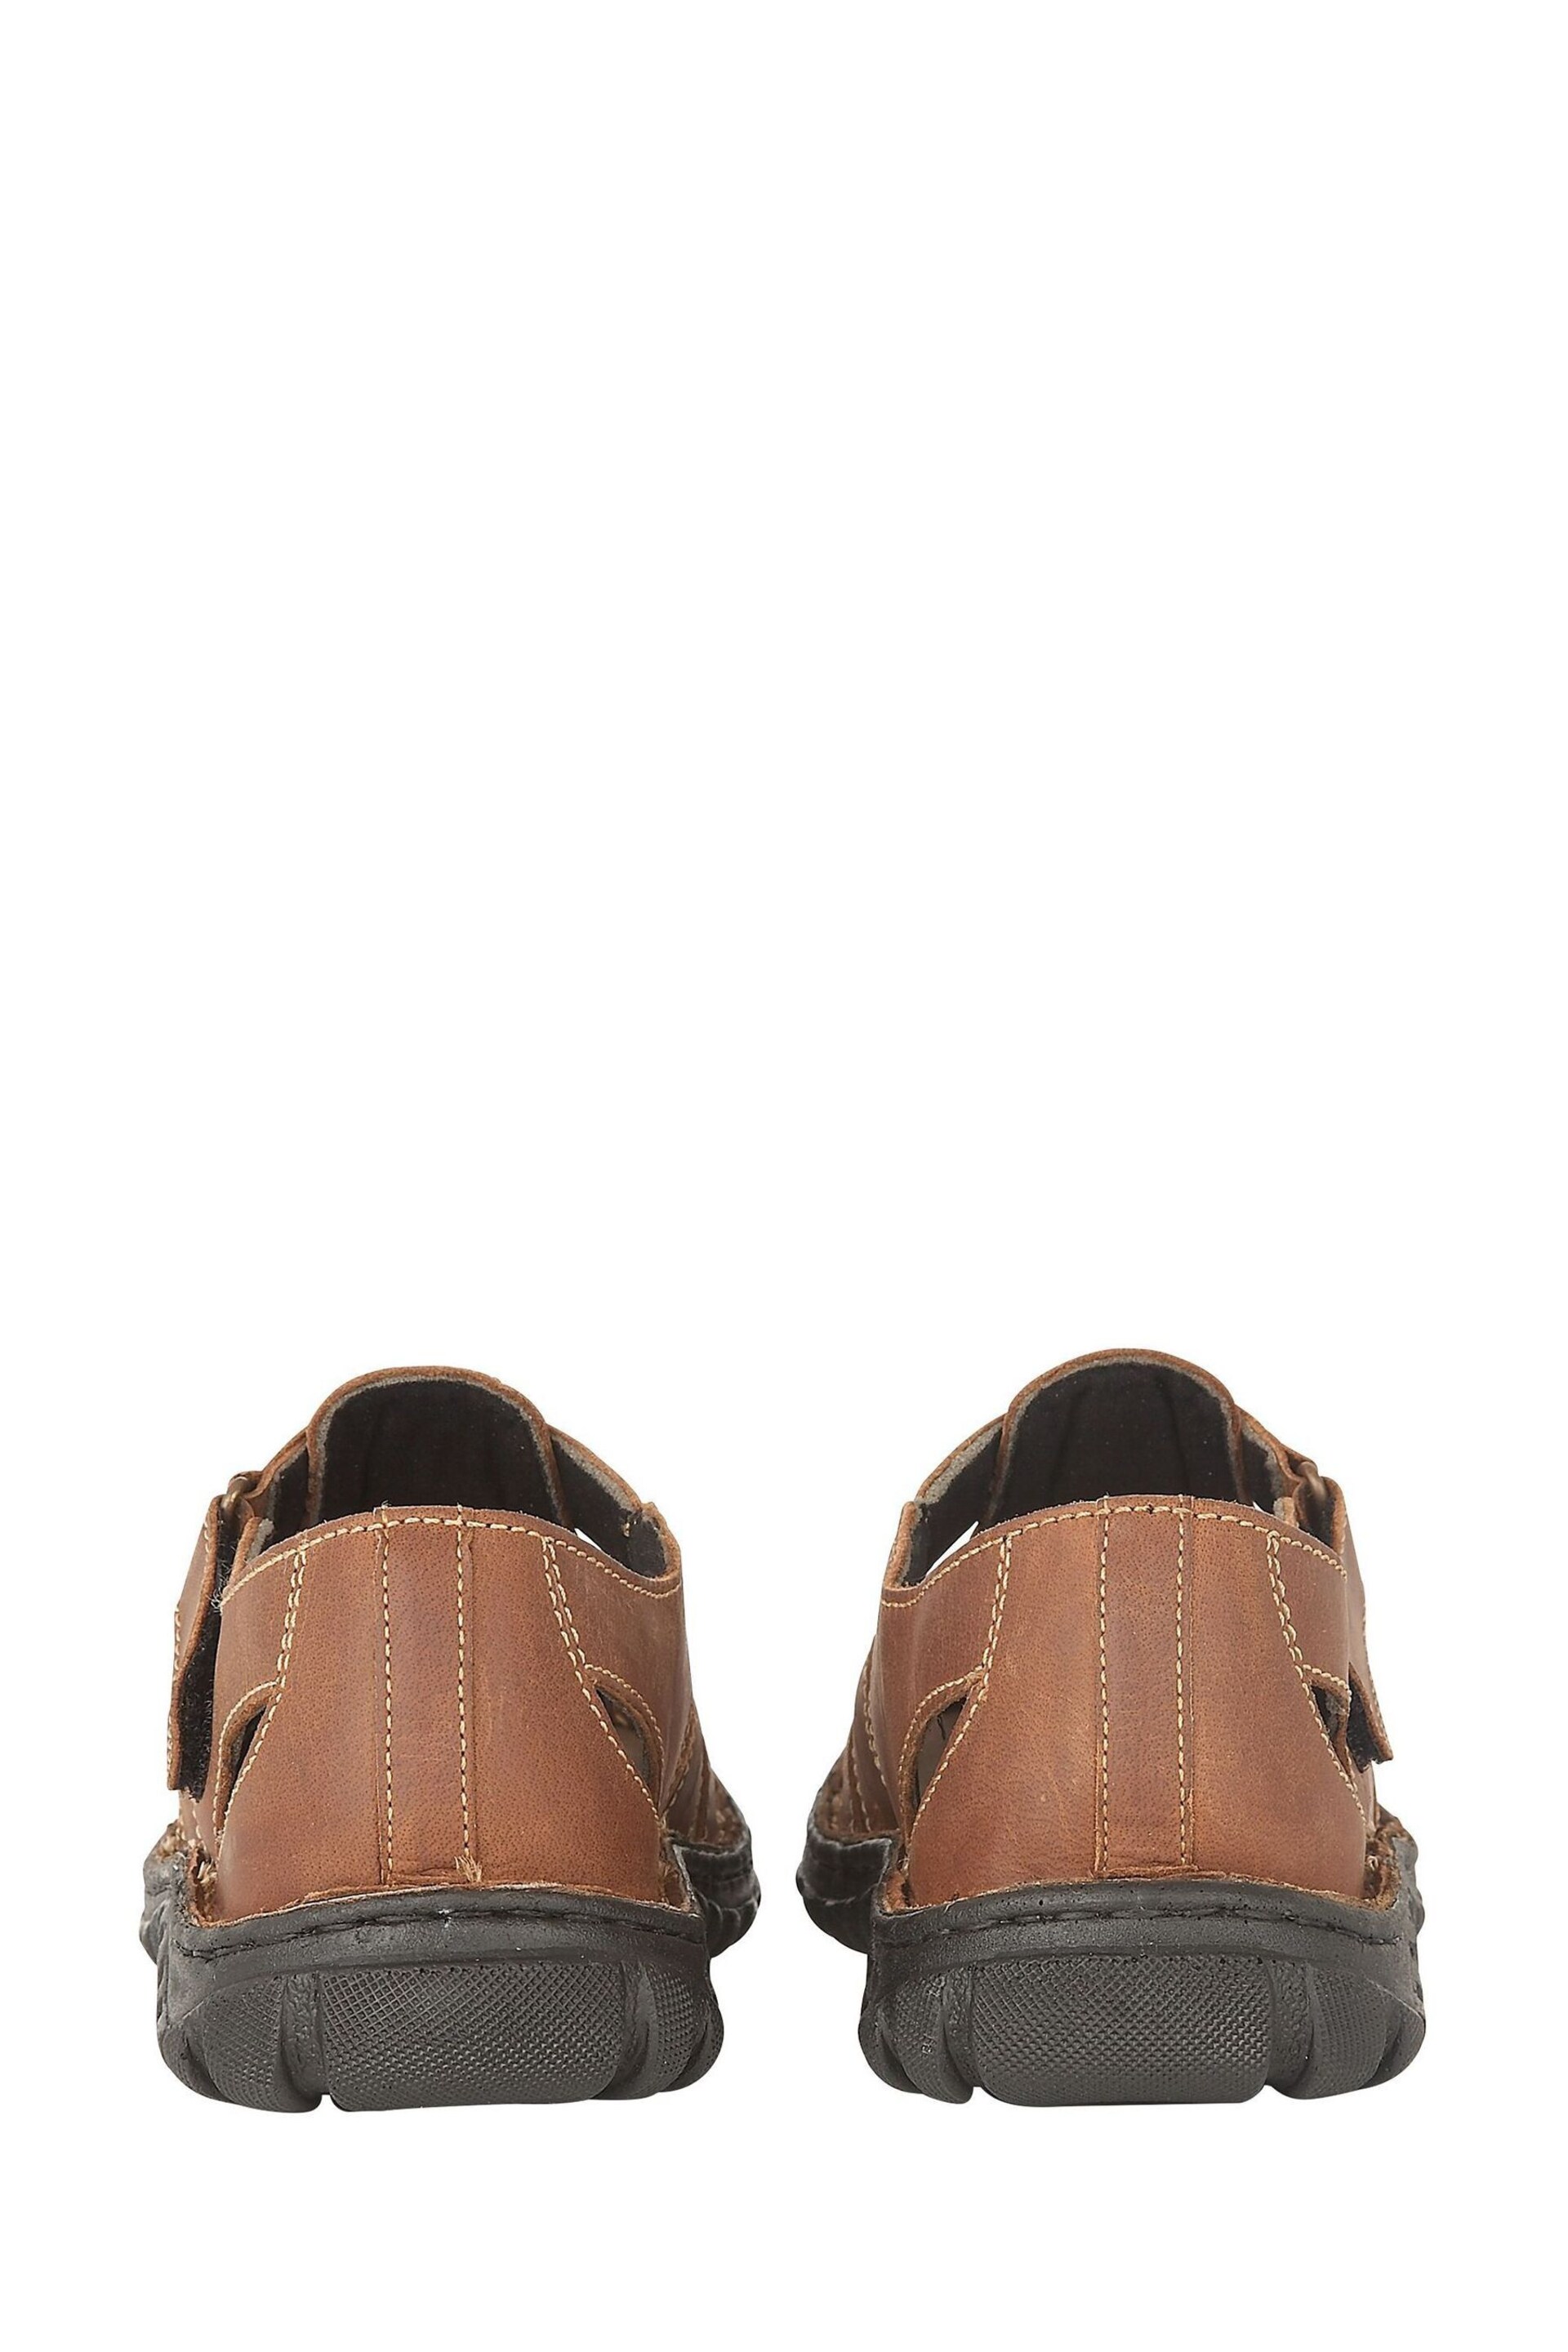 Lotus Brown Leather Fisherman Sandals - Image 3 of 4